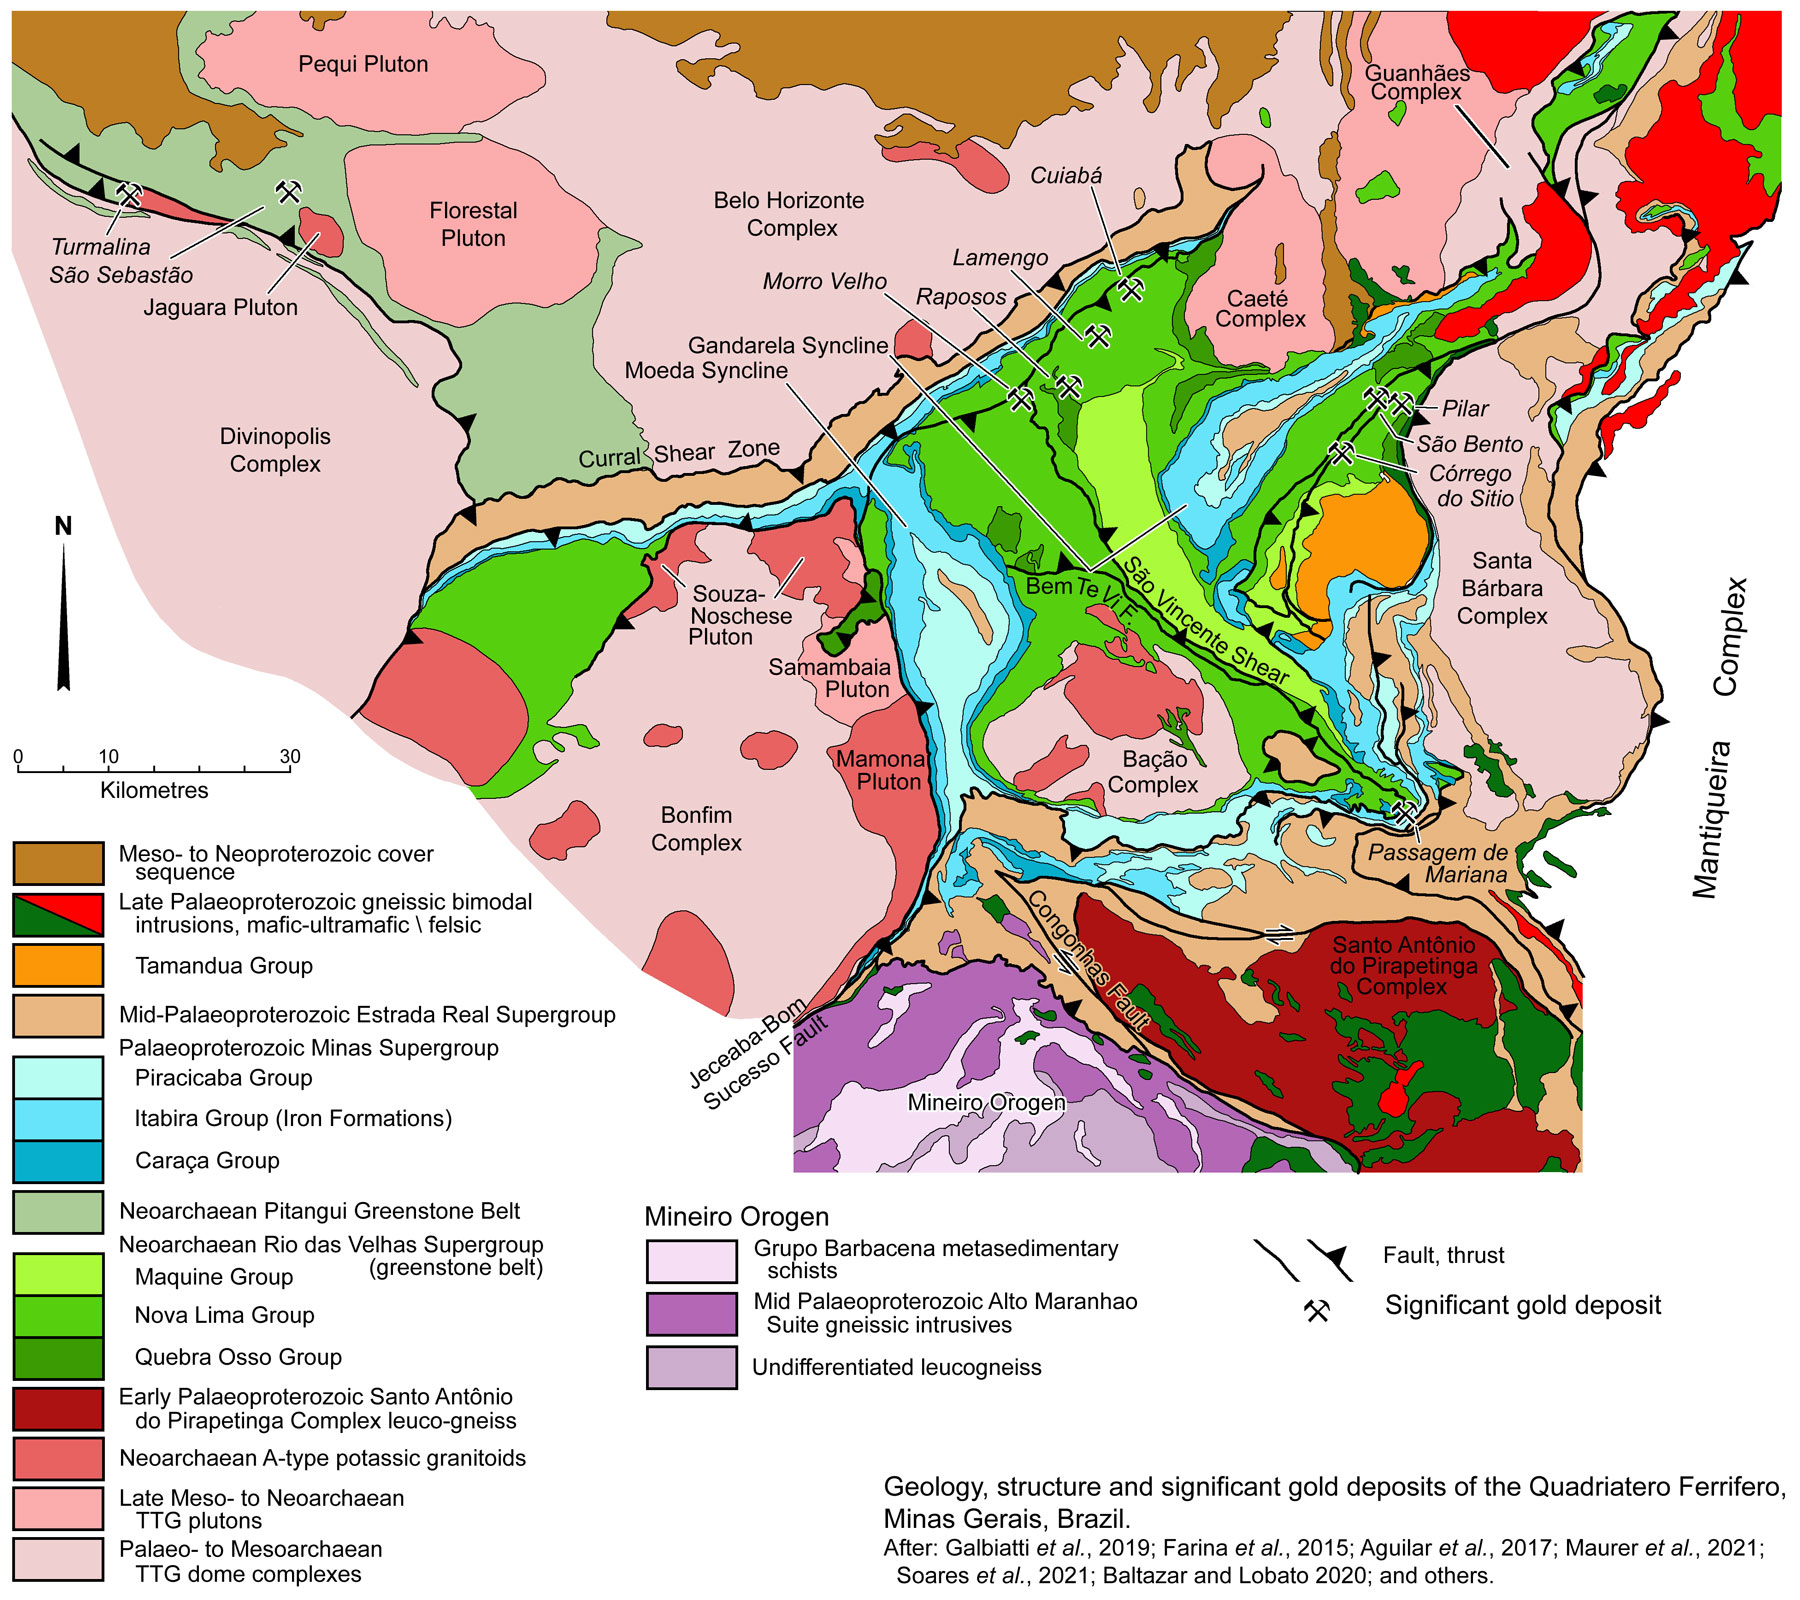 Geologyl and gold deposits of the Quadrilatero Ferrifero